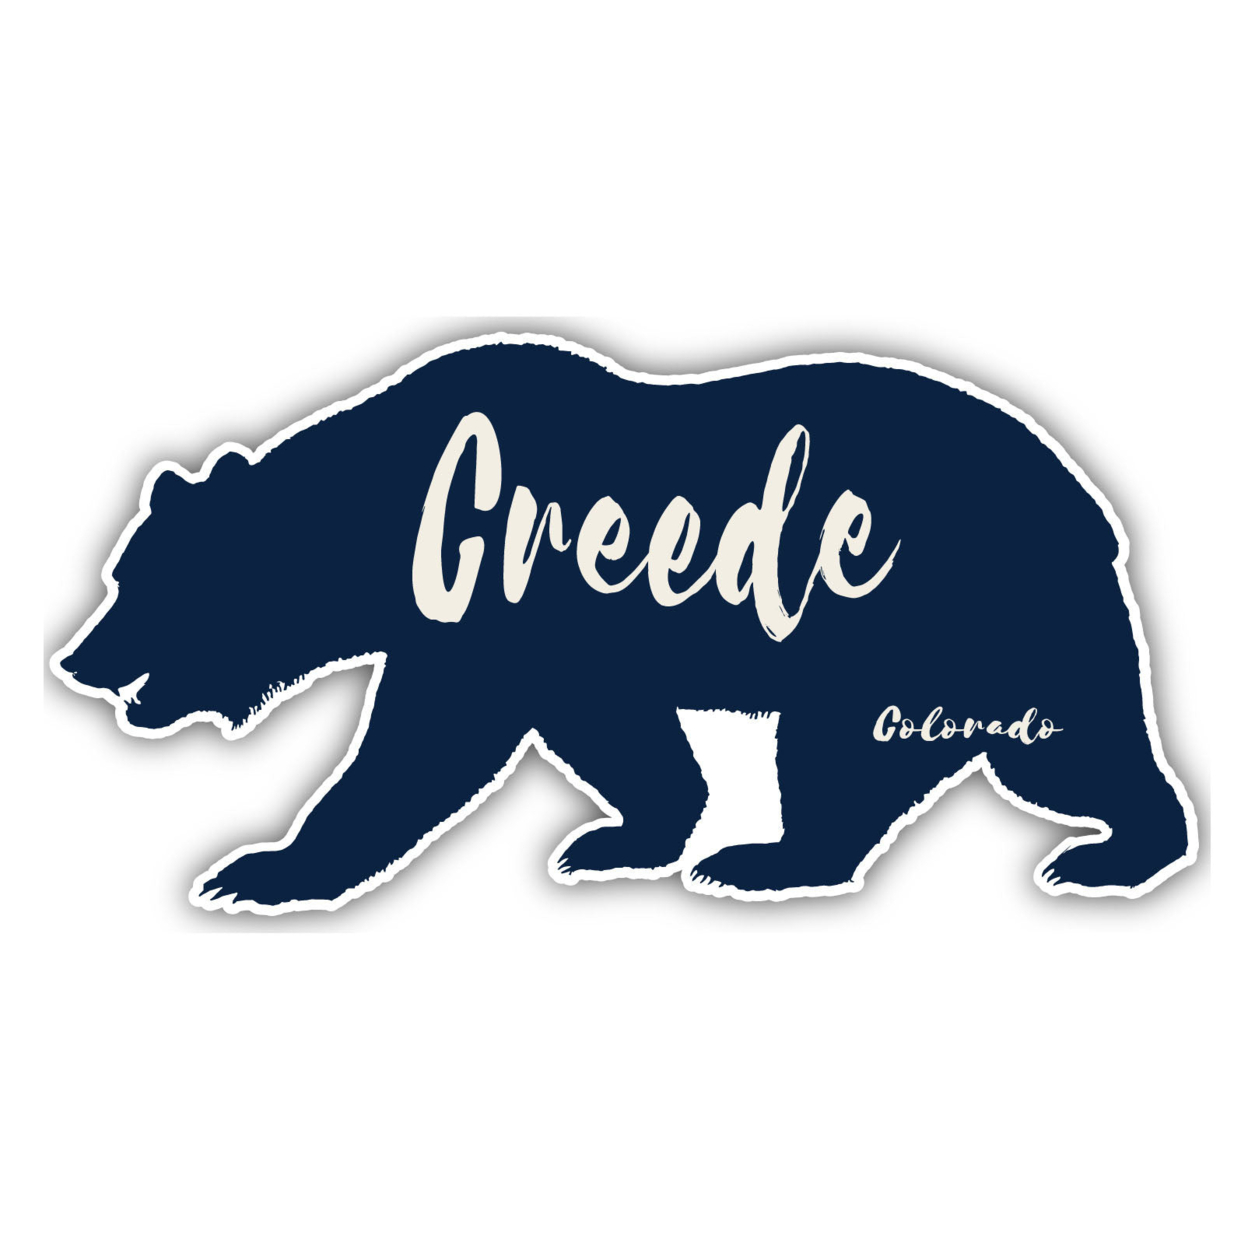 Creede Colorado Souvenir Decorative Stickers (Choose Theme And Size) - Single Unit, 12-Inch, Bear